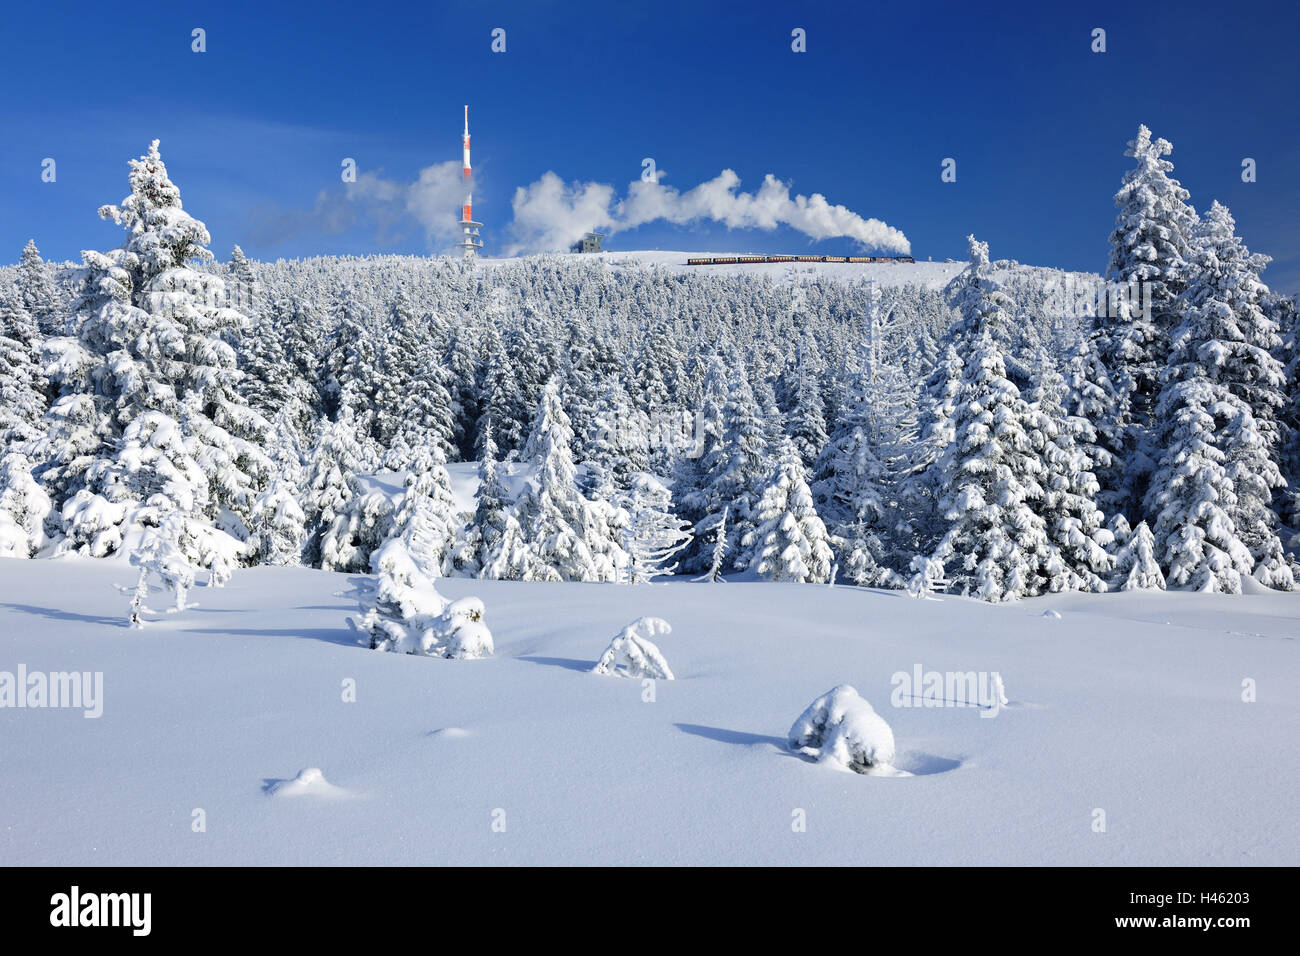 Germany, Saxony-Anhalt, National park Harz, winter scenery, lump trajectory, Stock Photo